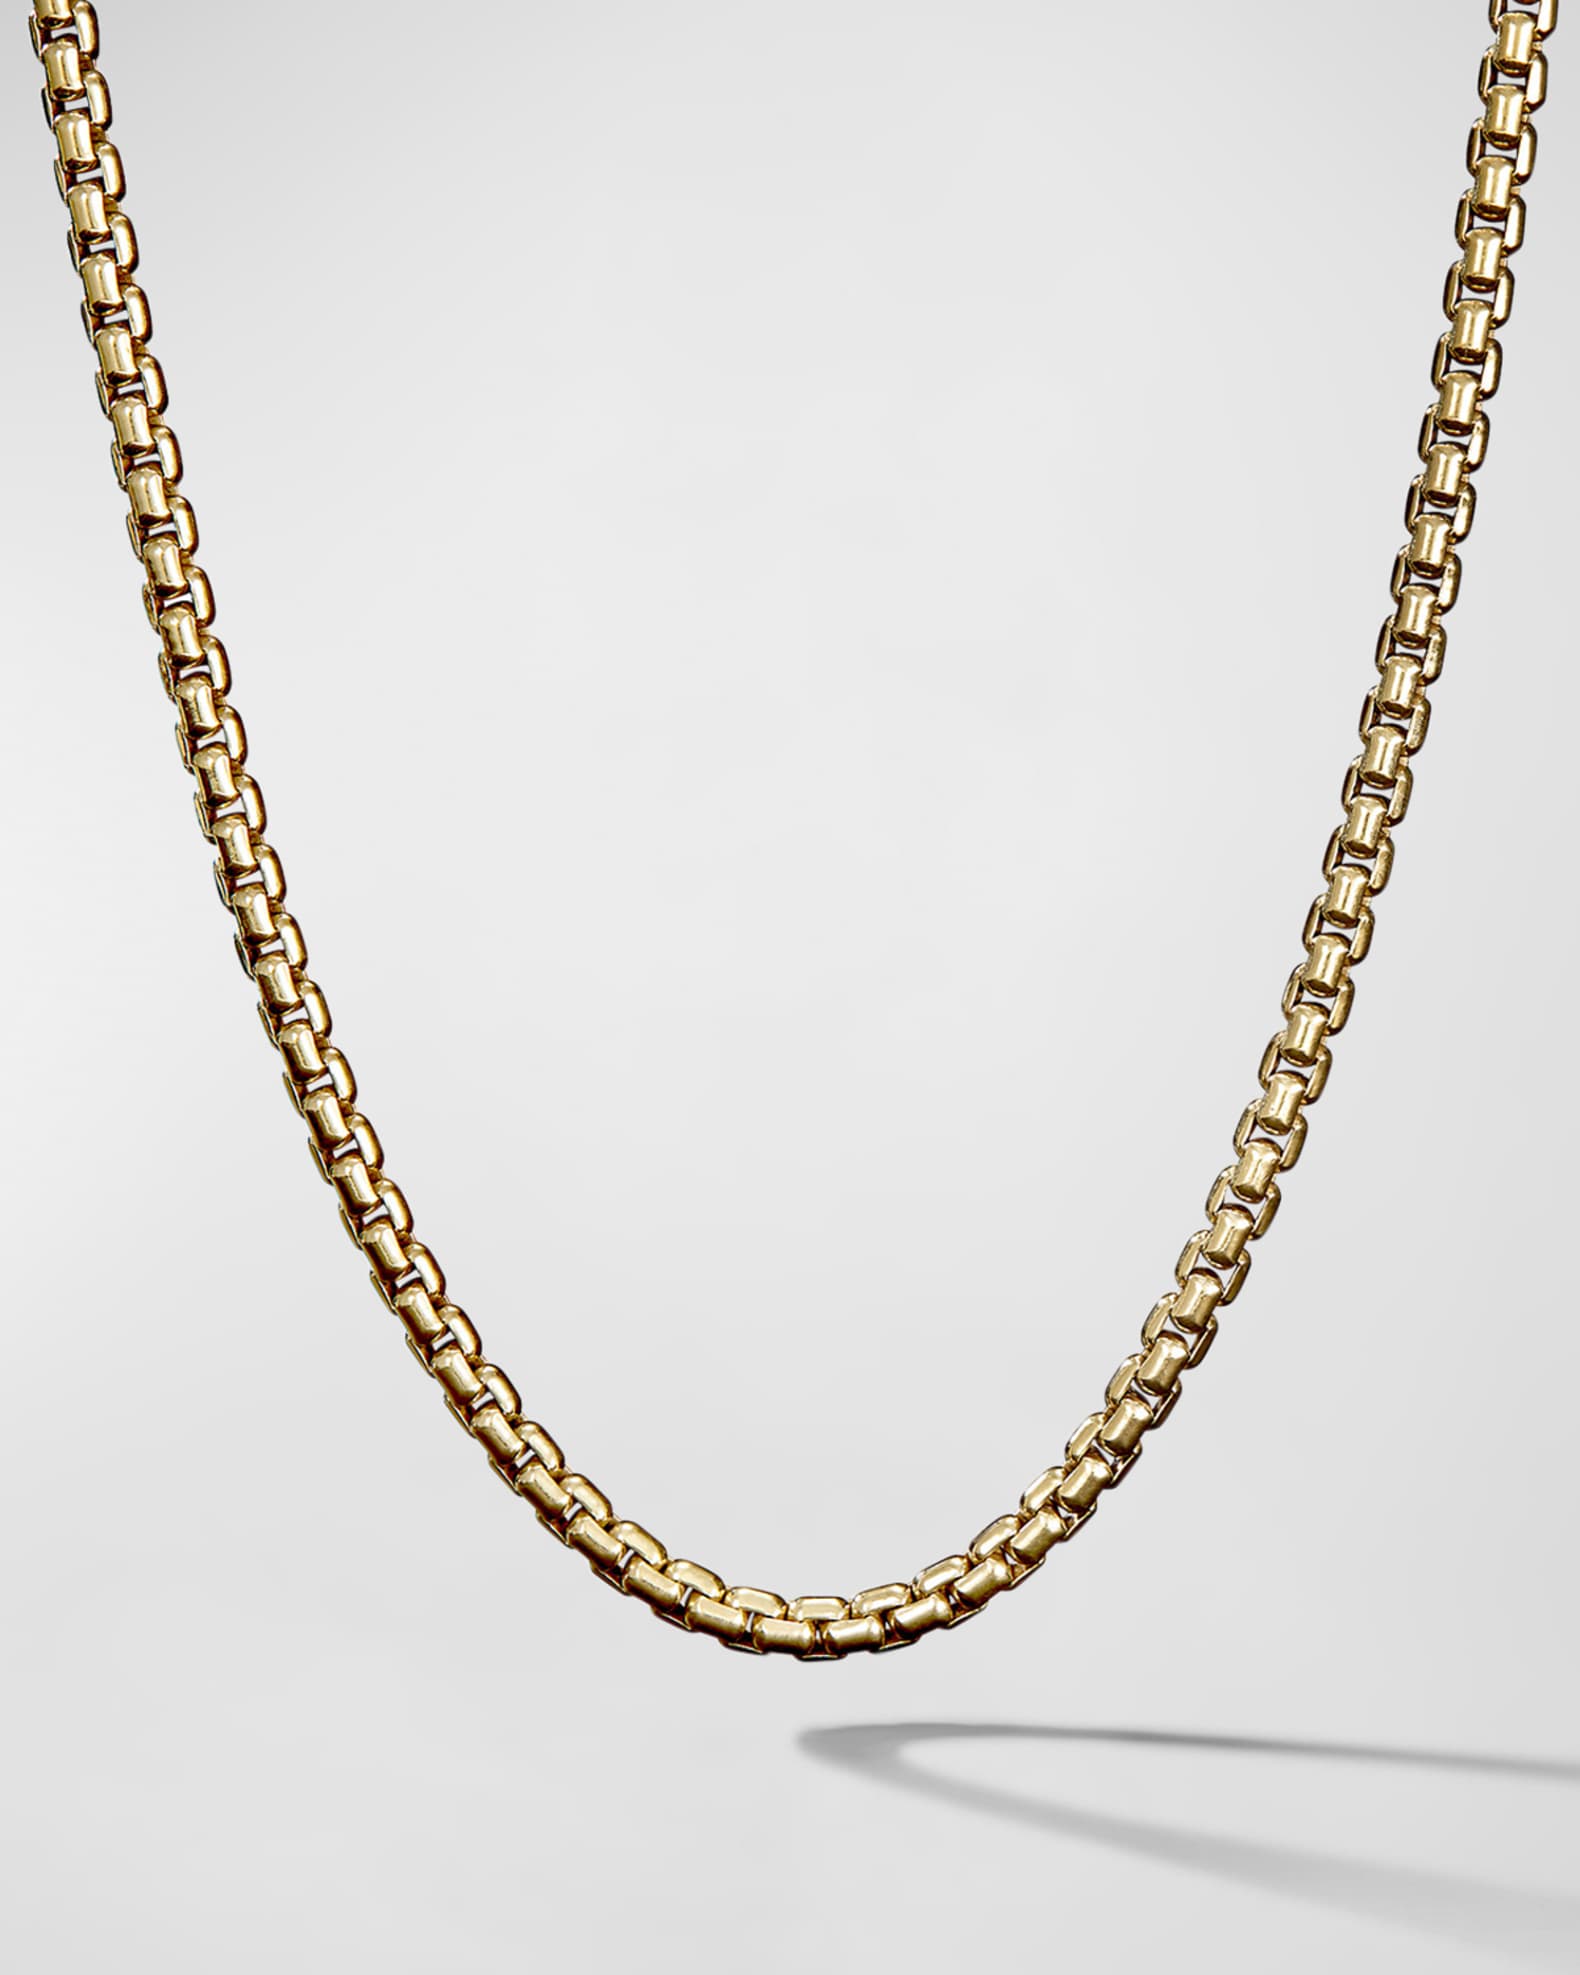 David Yurman Men's Box Chain Necklace in 18K Gold, 3.6mm, 24